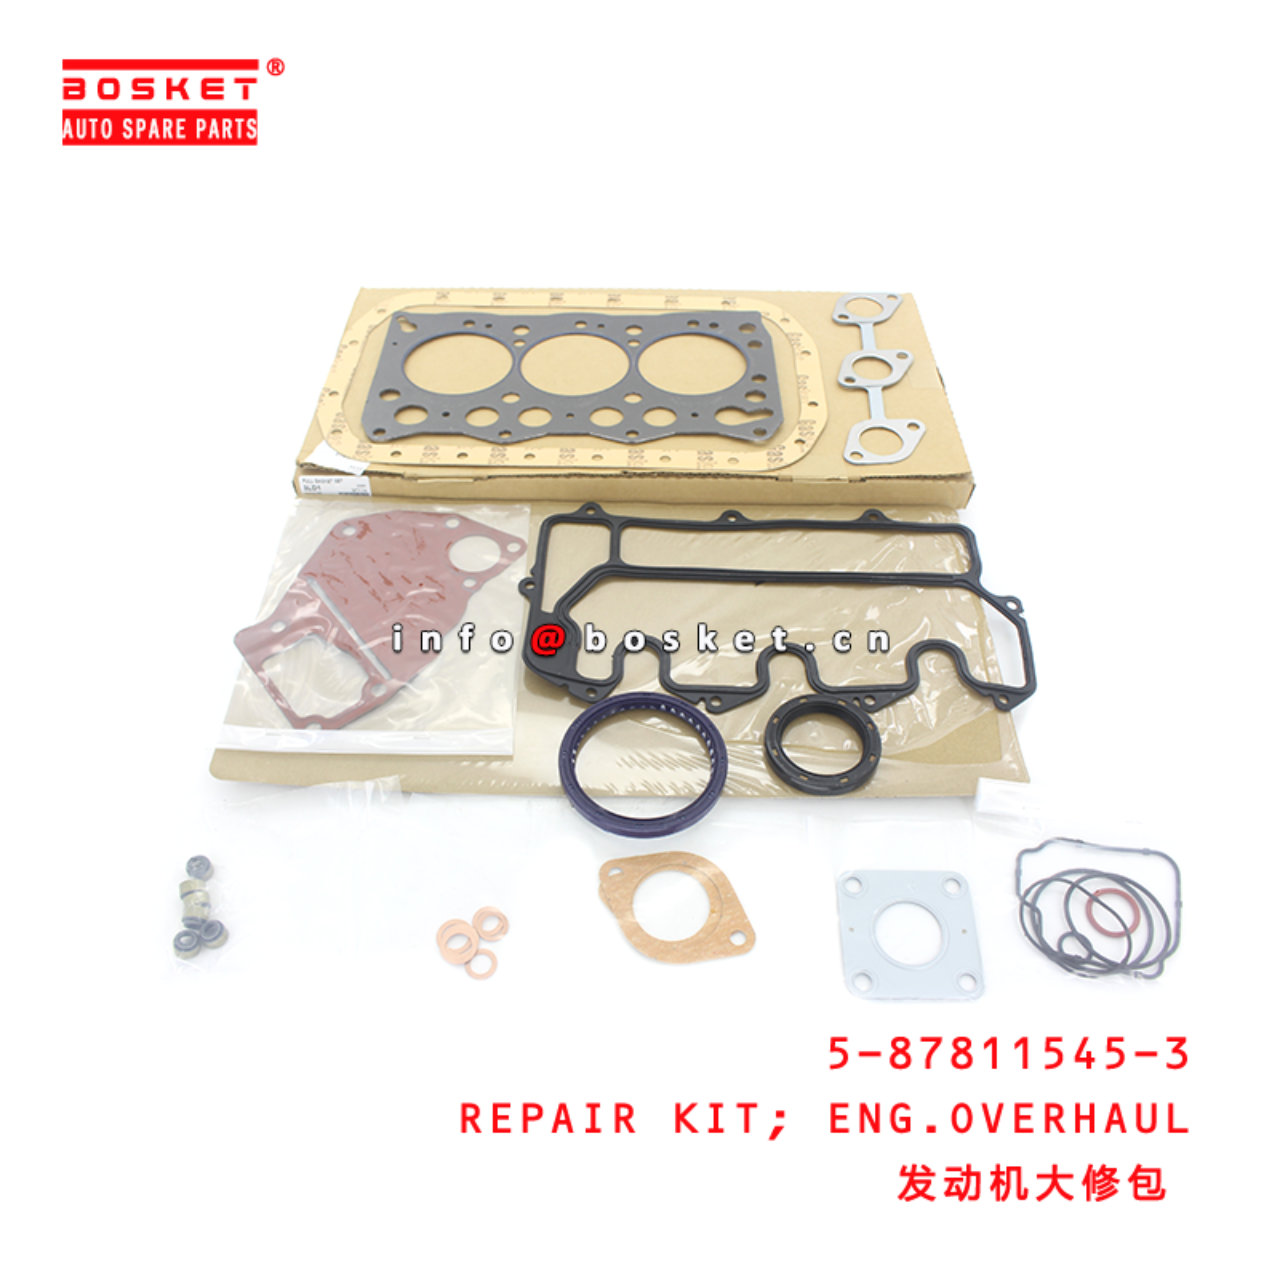 5-87811545-3 Engine Overhaul Repair Kit 5878115453 Suitable for ISUZU XD 3LD1